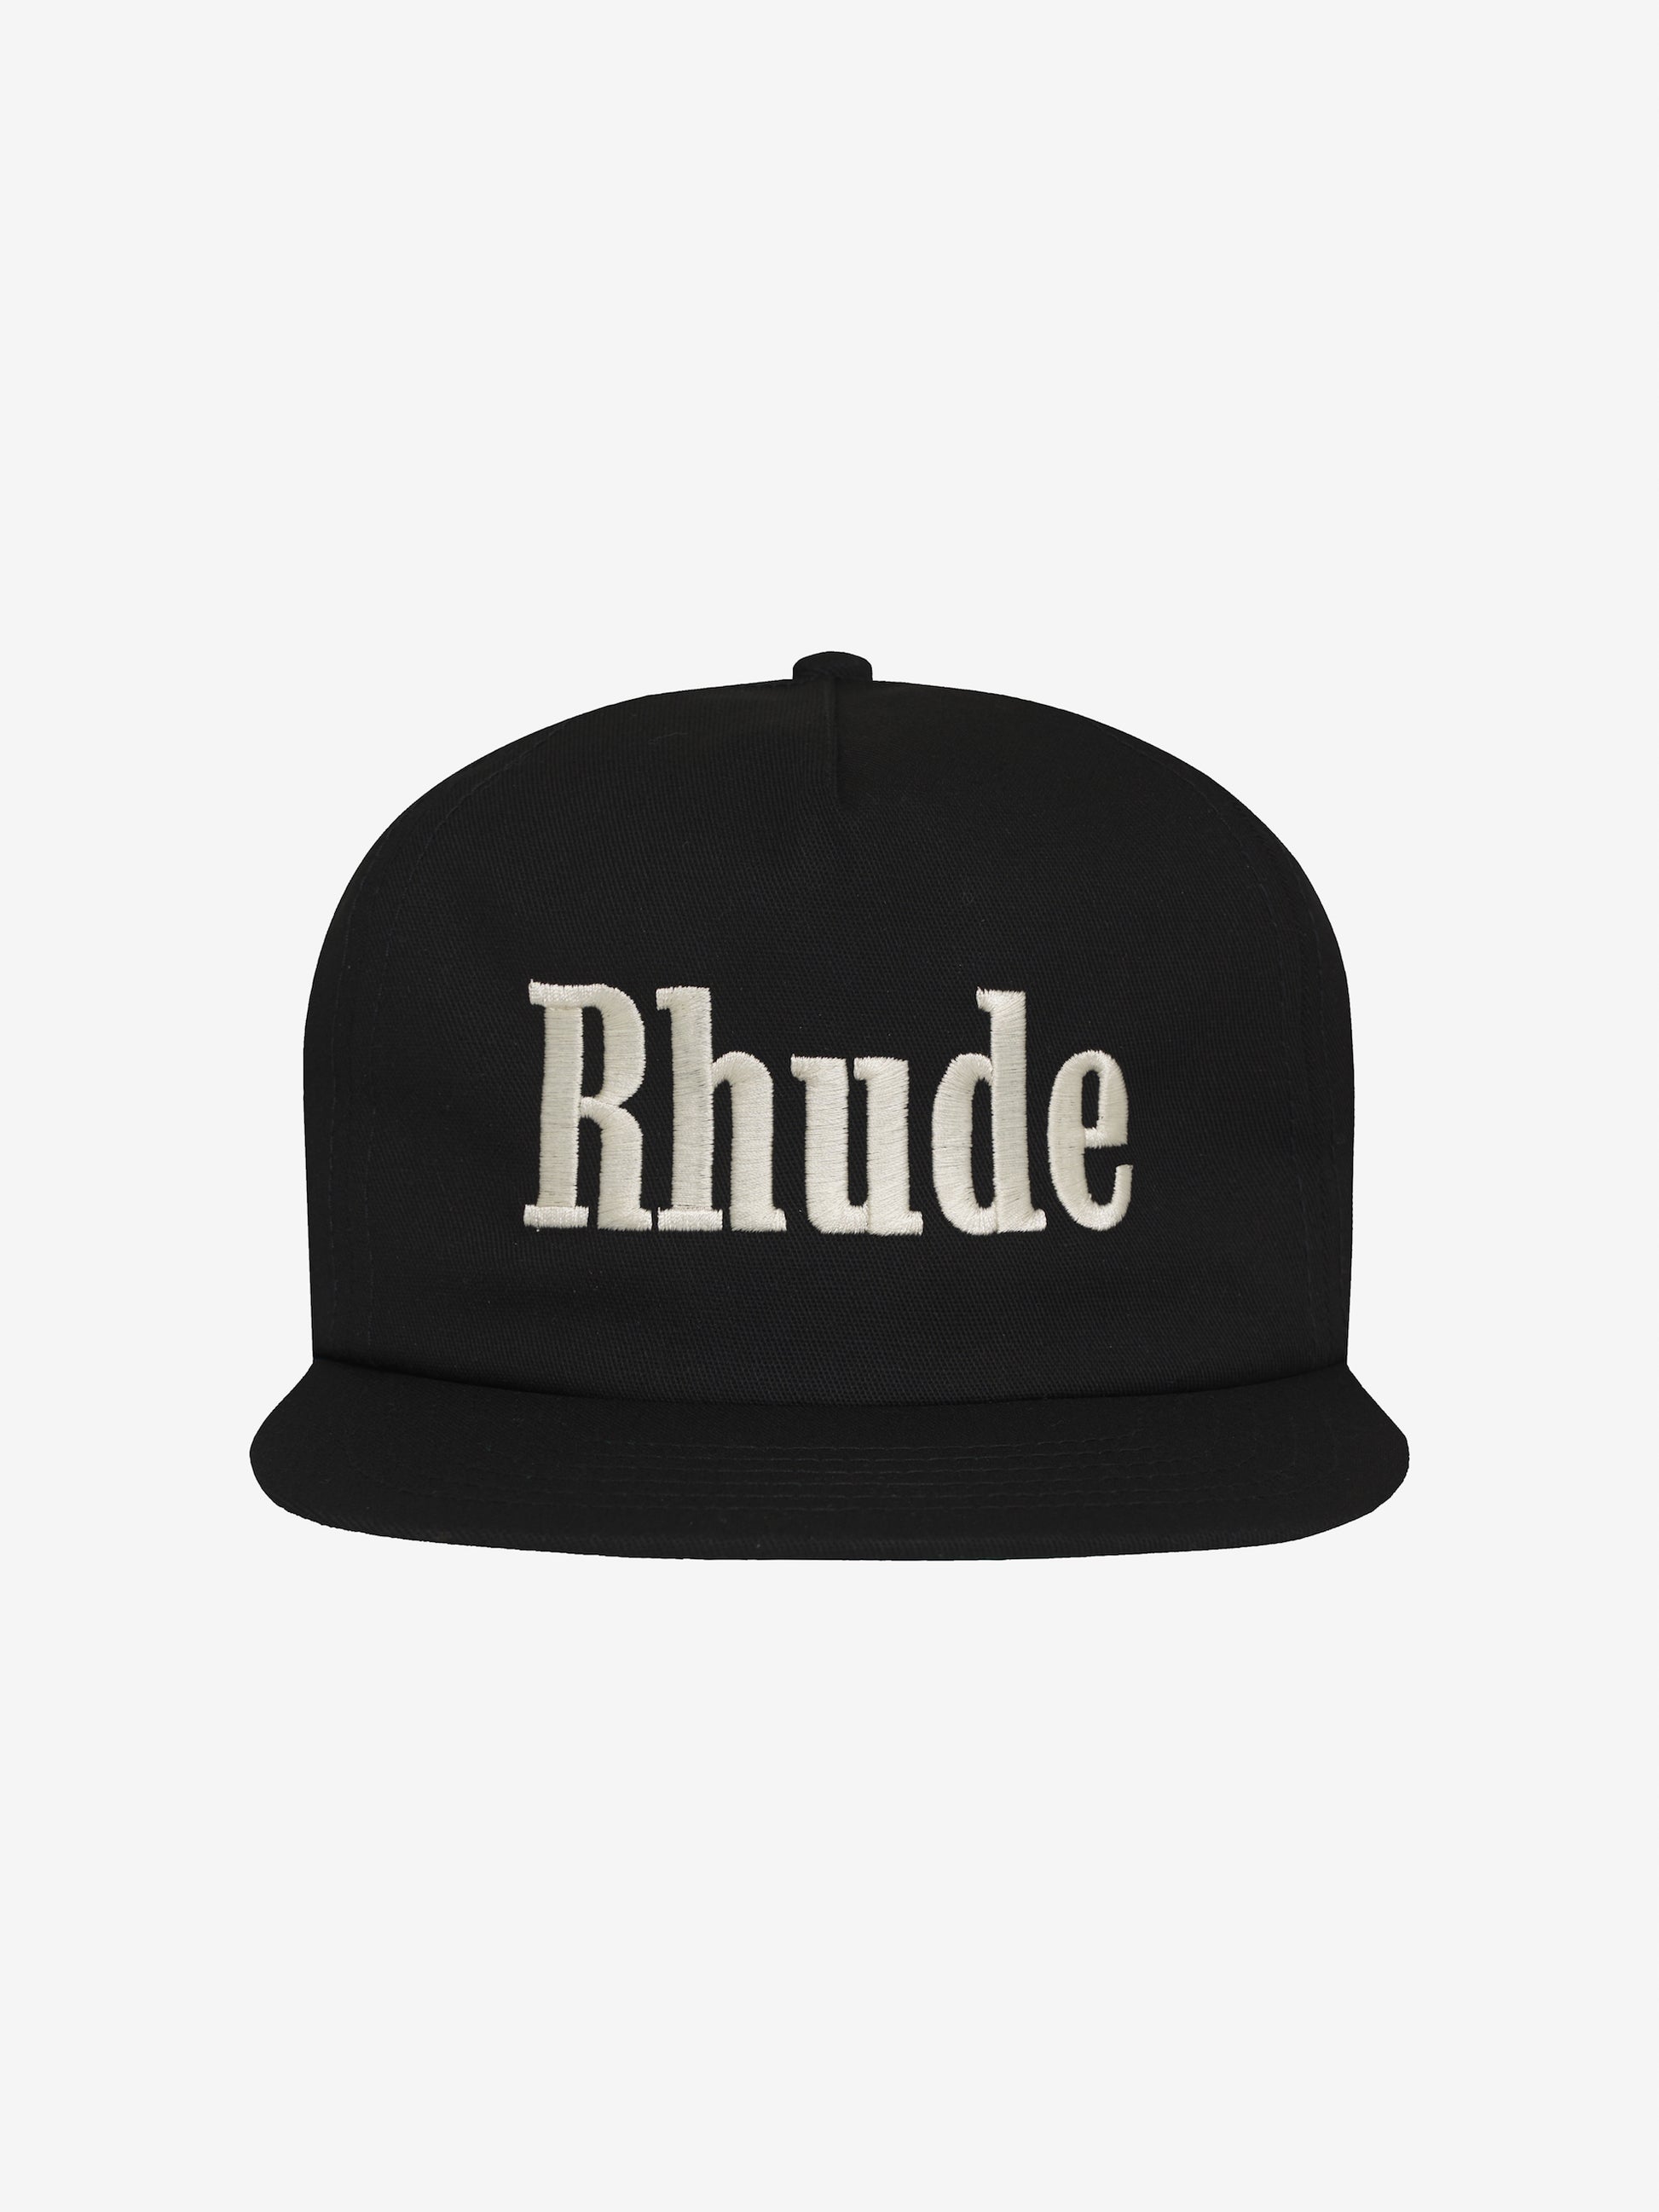 Rhude – Suit Negozi Row, 53% OFF